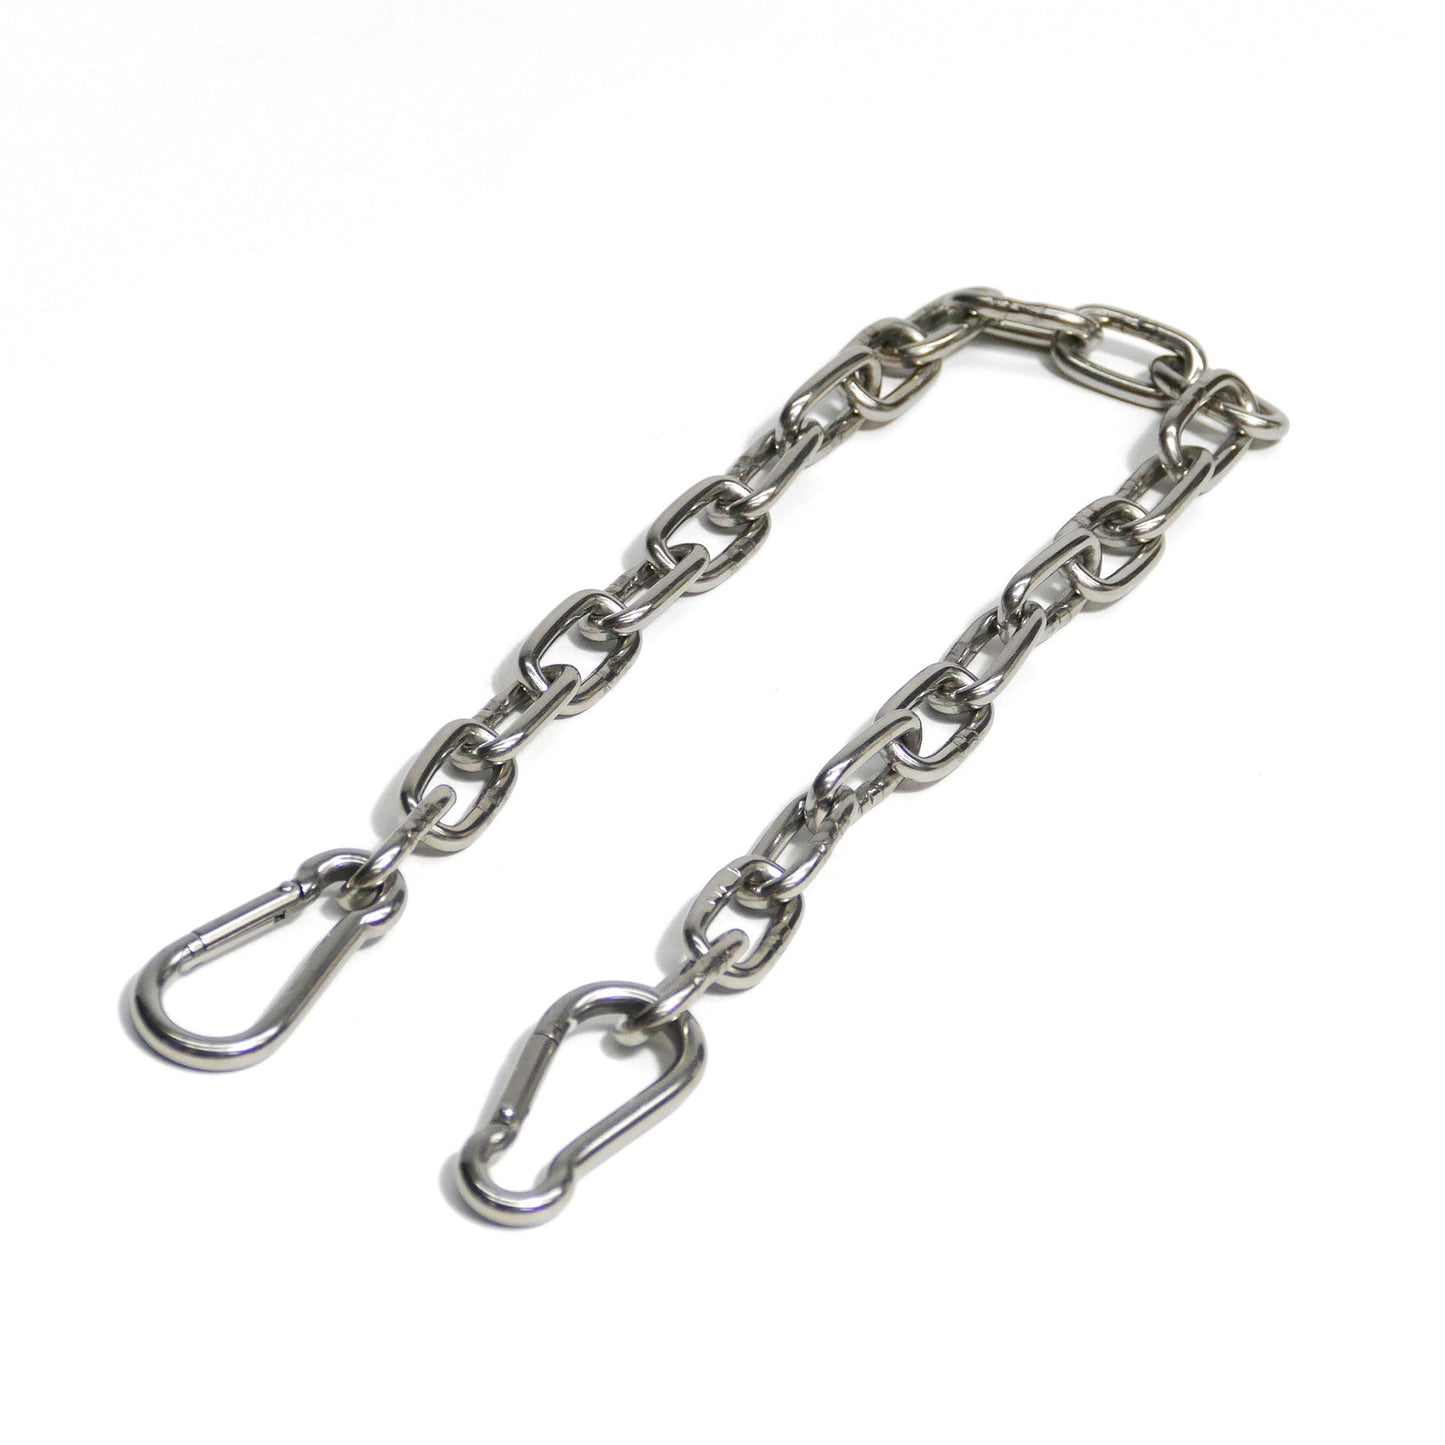 Stainless Steel Baby Hammock Chain